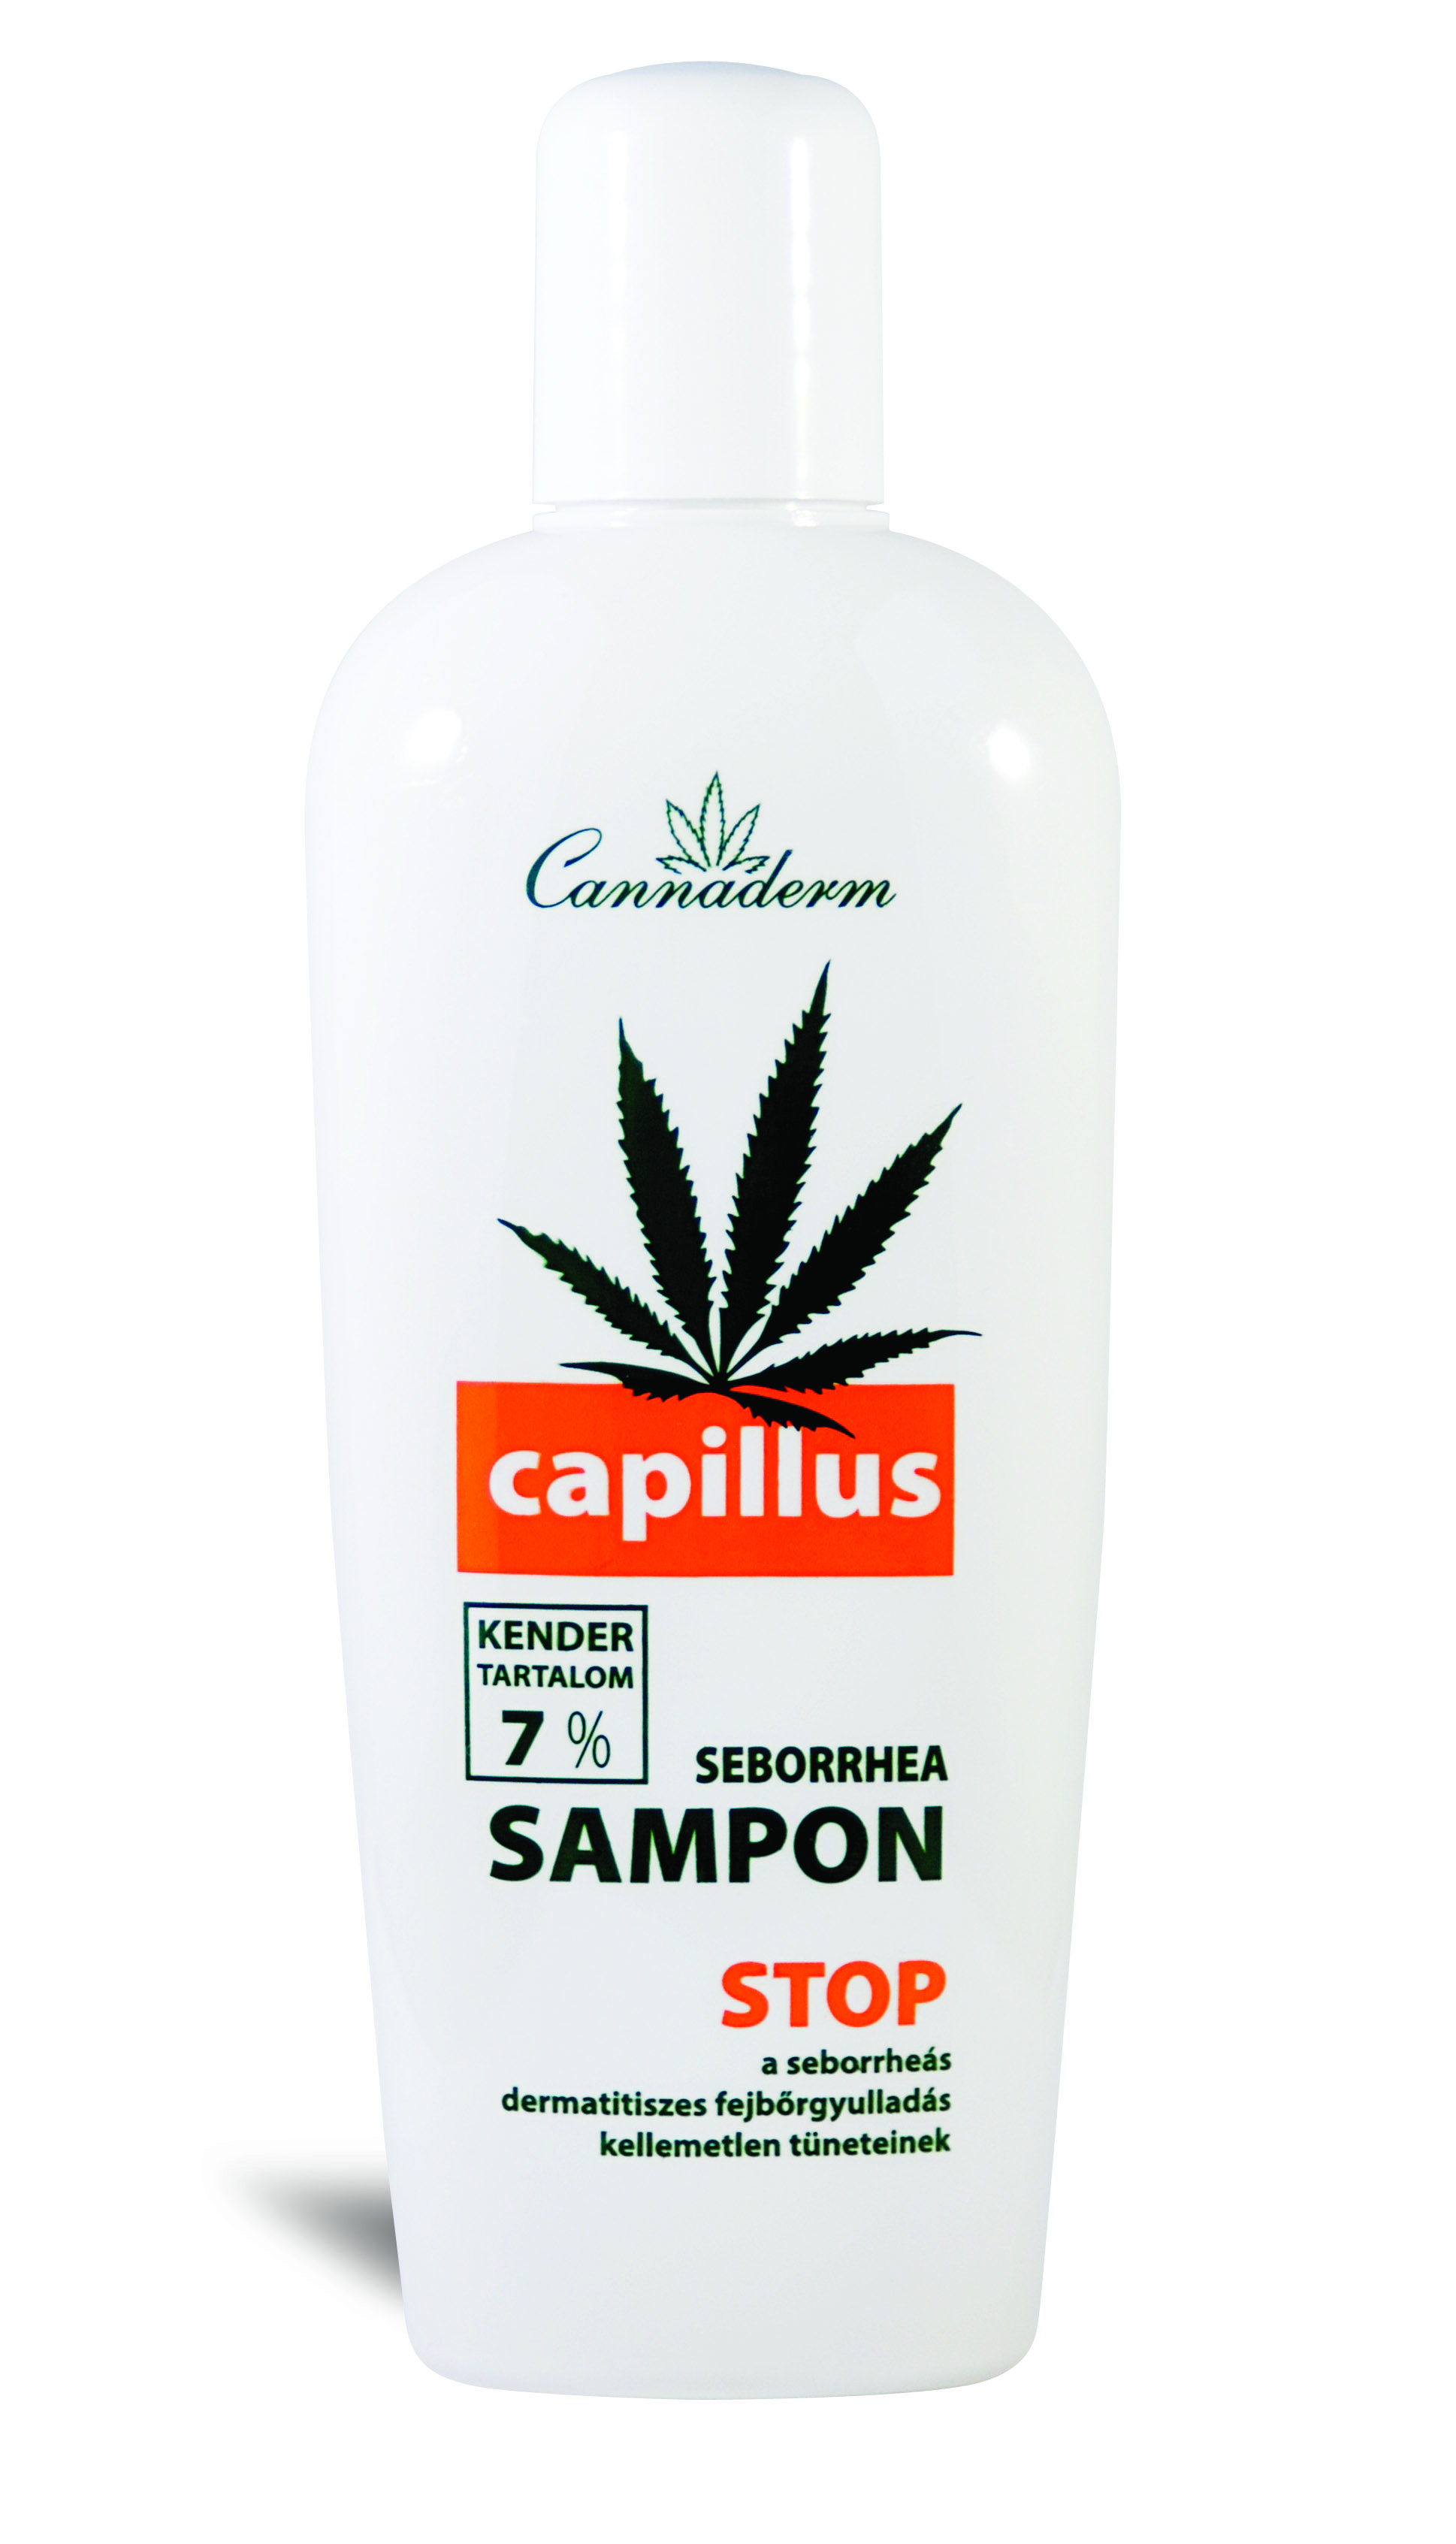 Cannaderm Capillus sampon seborrheás bőrre